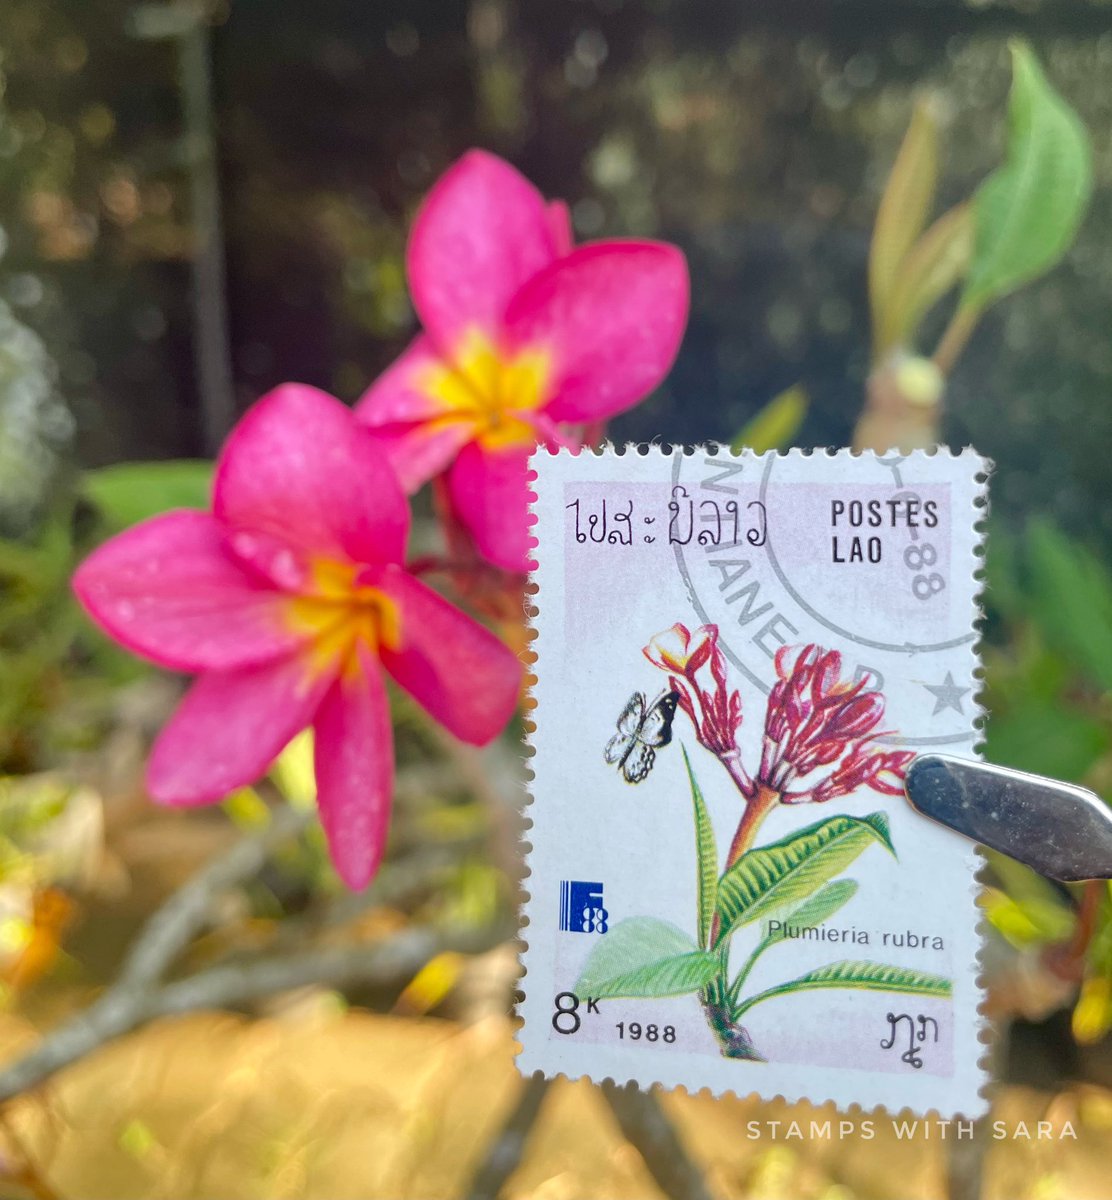 Country : Laos 
Sheet.    : 1988
Plumieria

#stampswith_sara #XtremePhilately #philately #SriLanka #Laos